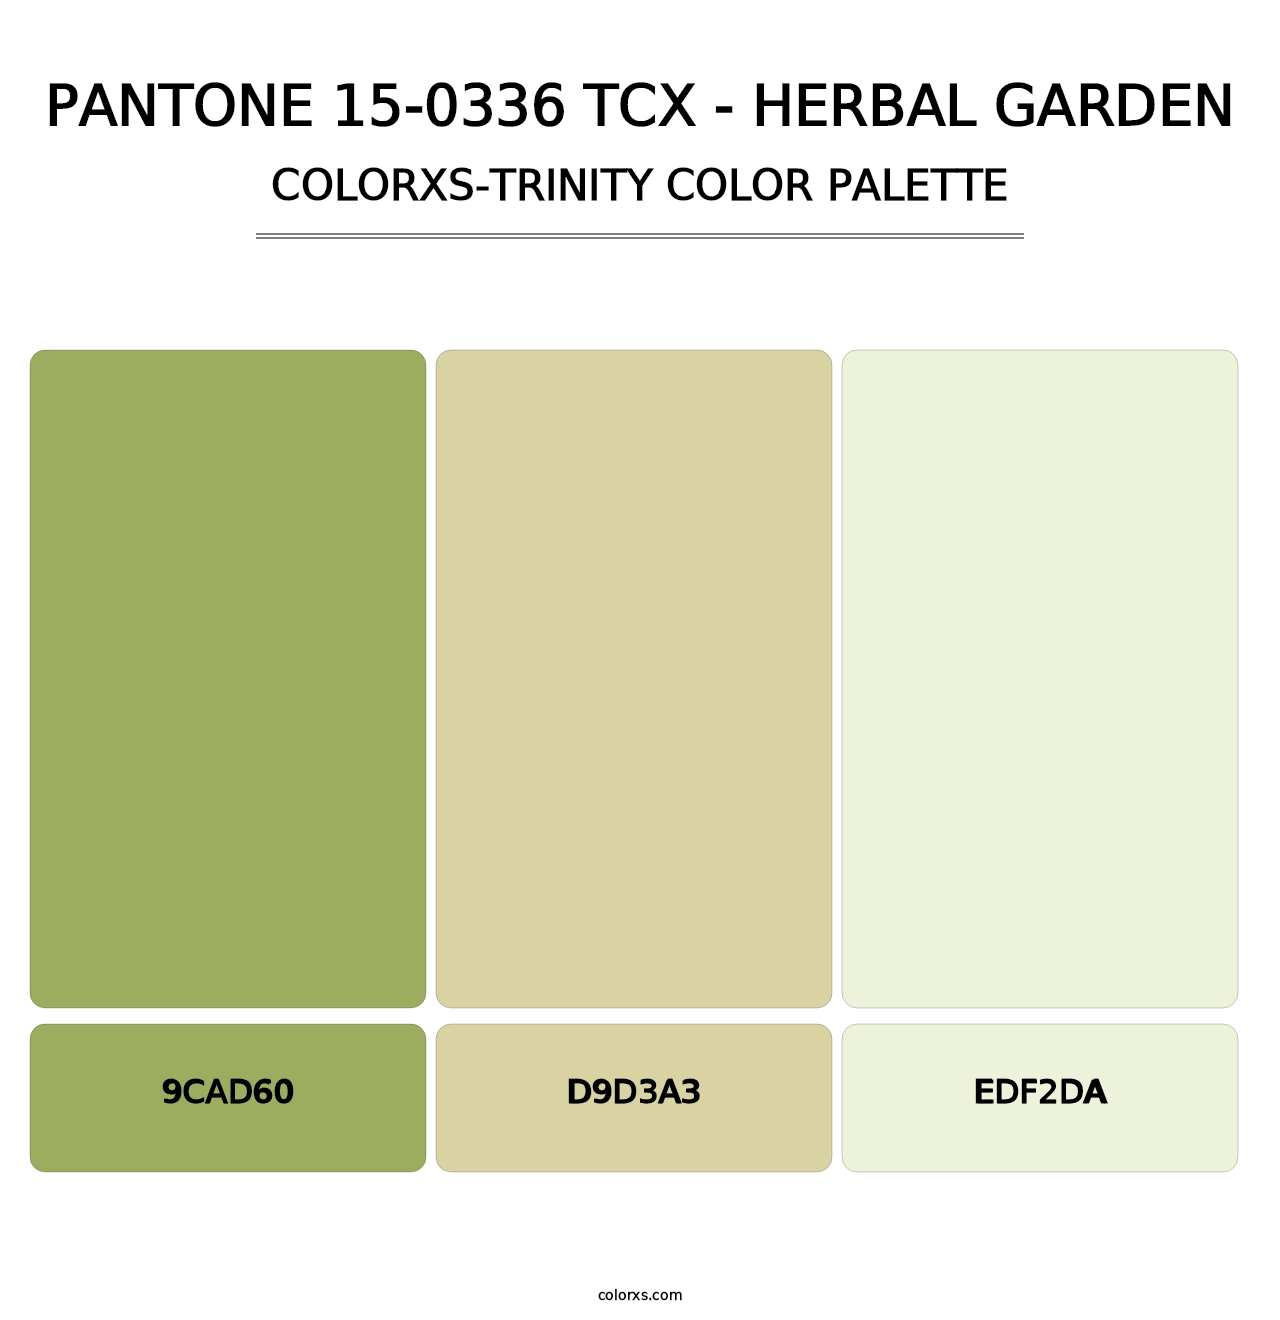 PANTONE 15-0336 TCX - Herbal Garden - Colorxs Trinity Palette